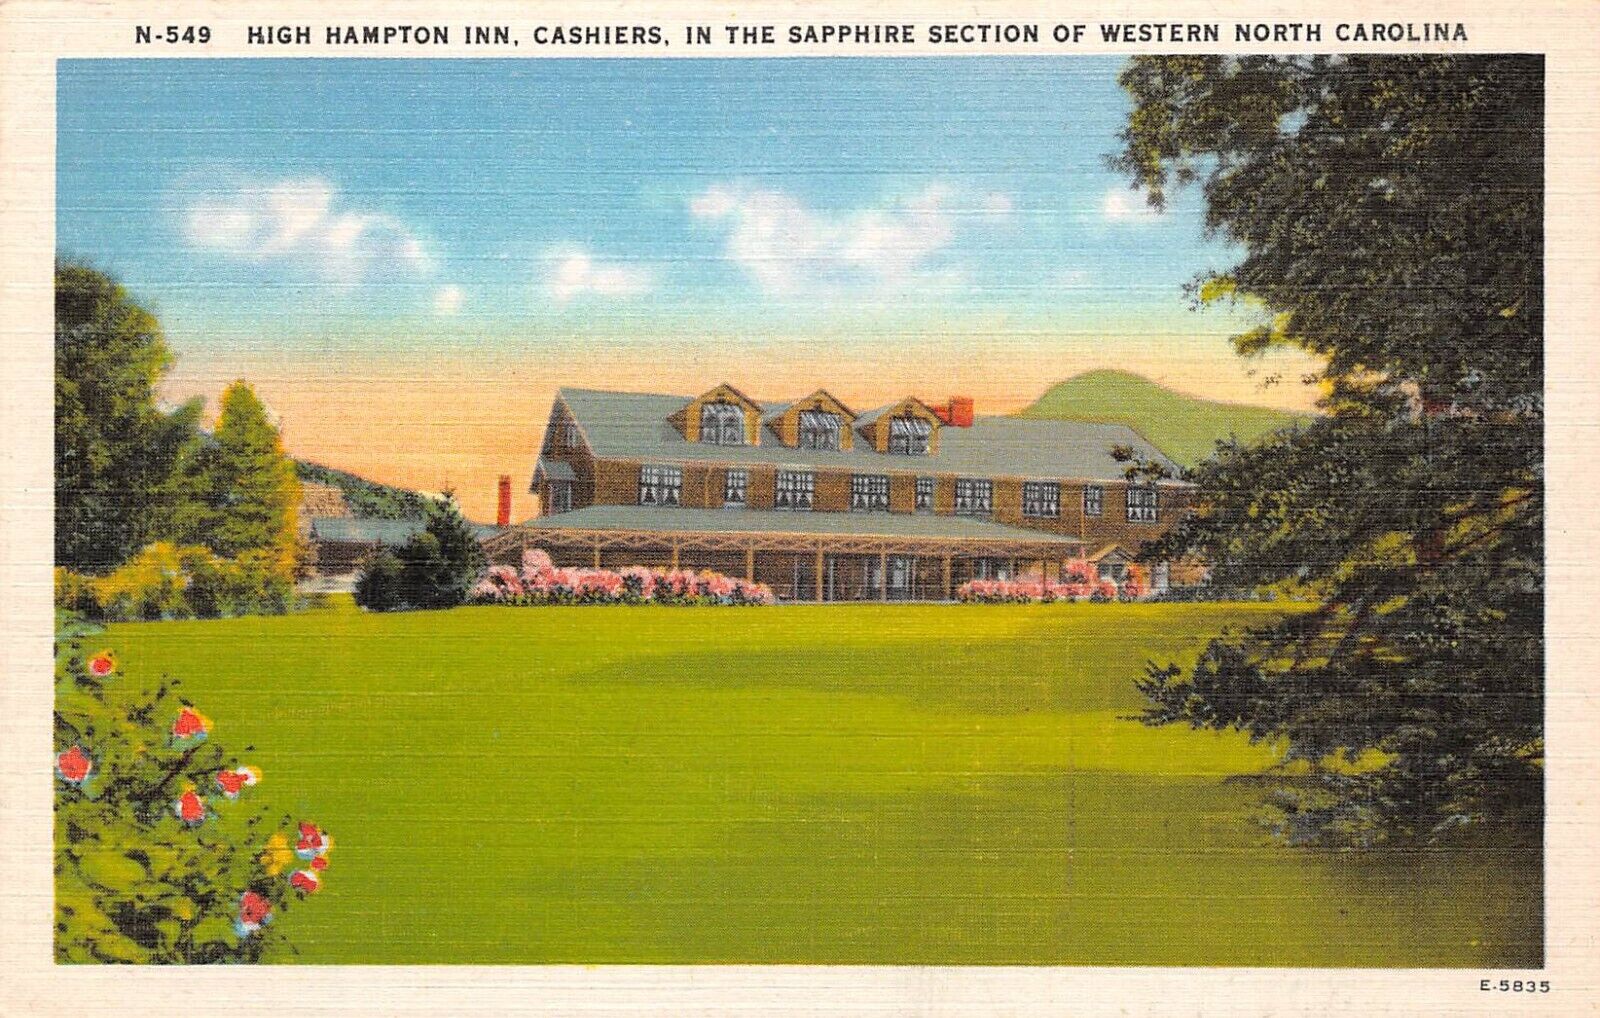 North Carolina Western High Hampton Inn Cashiers Linen Postcard